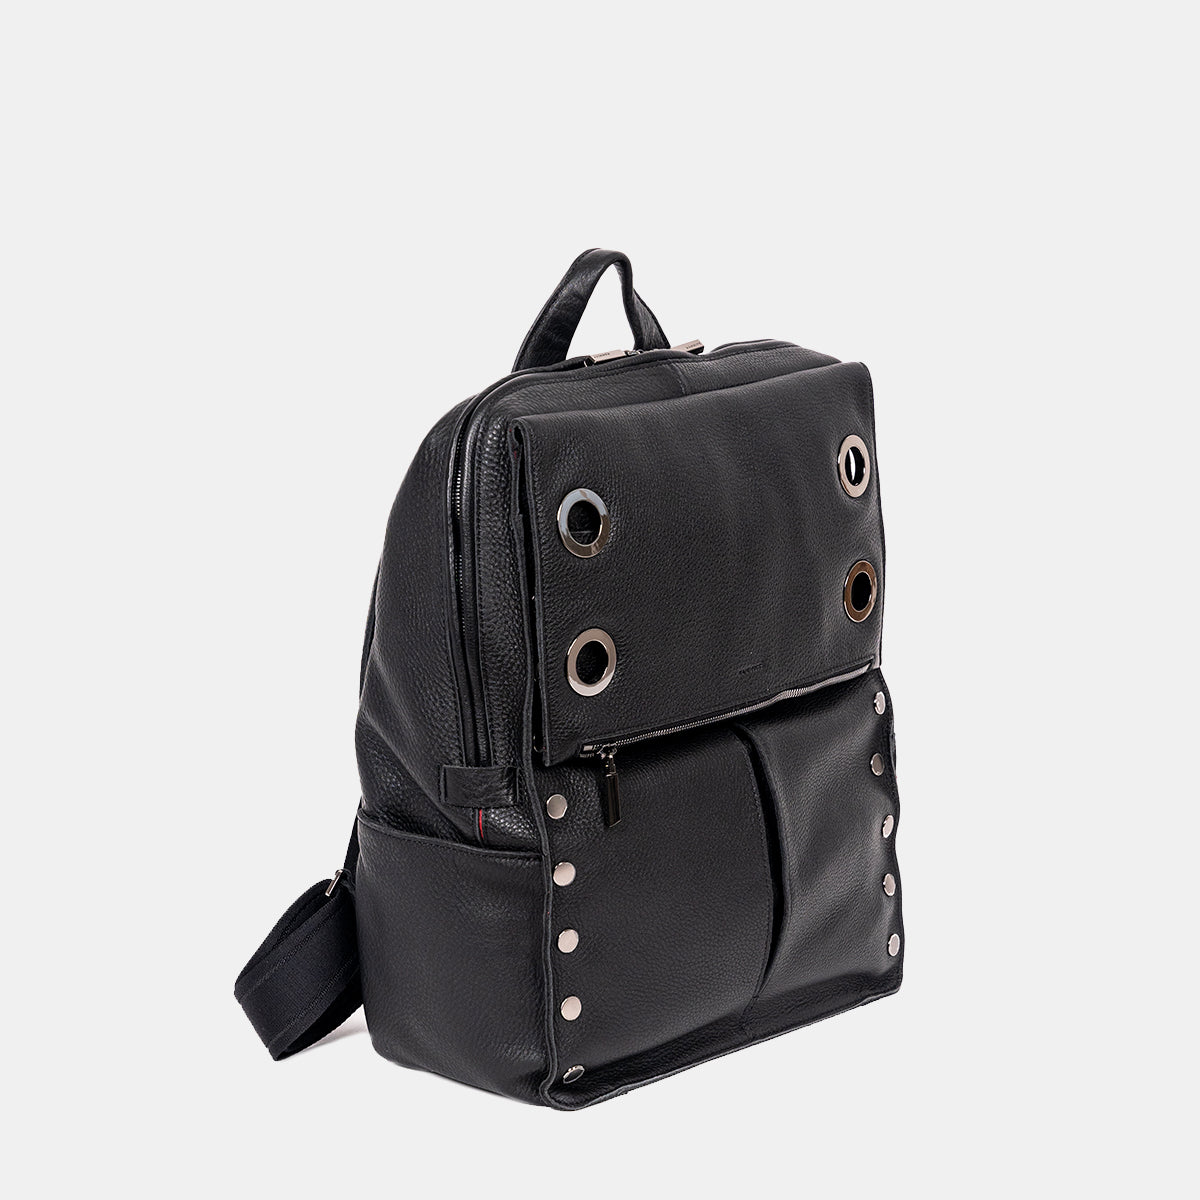 Hammitt Montana Large Backpack Black Pebbled Leather